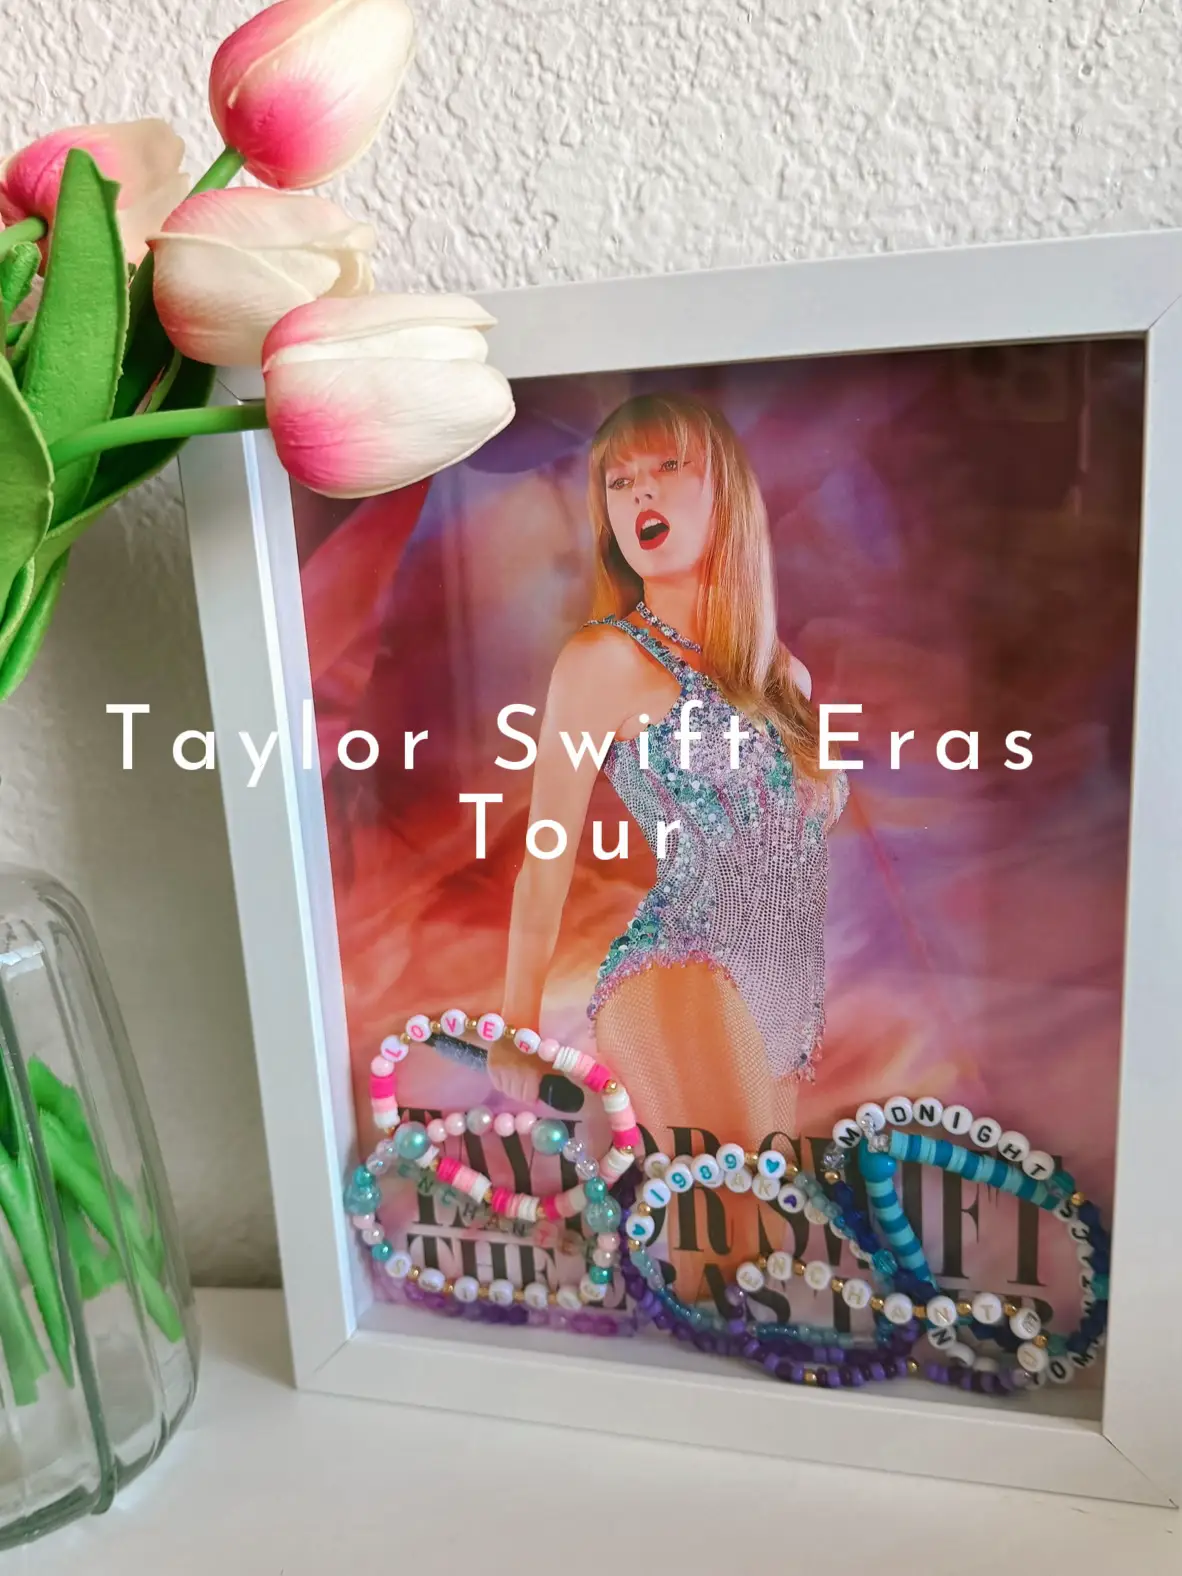 Taylor Swift ERAS TOUR Calendar 2024 (fanmade + free download link)  ❤️🎀❤️🦋 